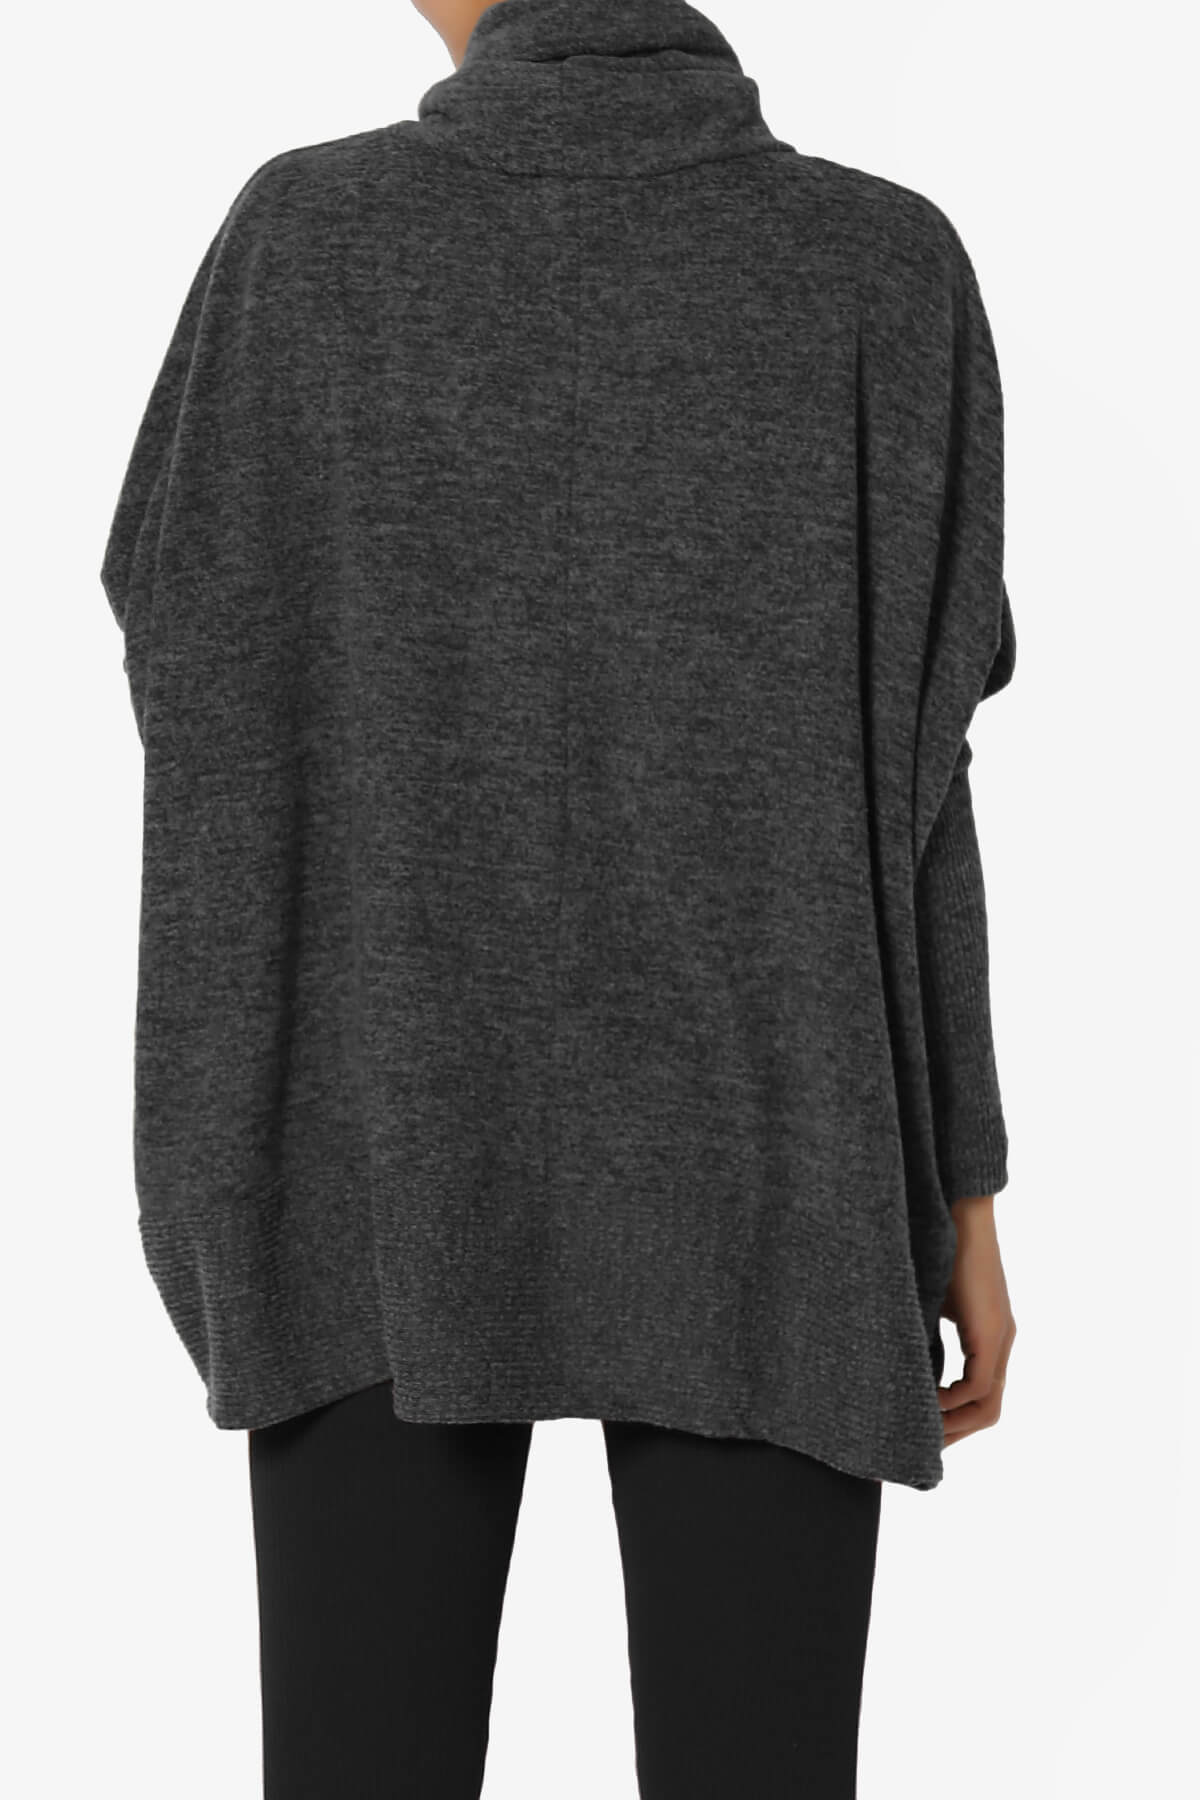 Barclay Cowl Neck Melange Knit Oversized Sweater